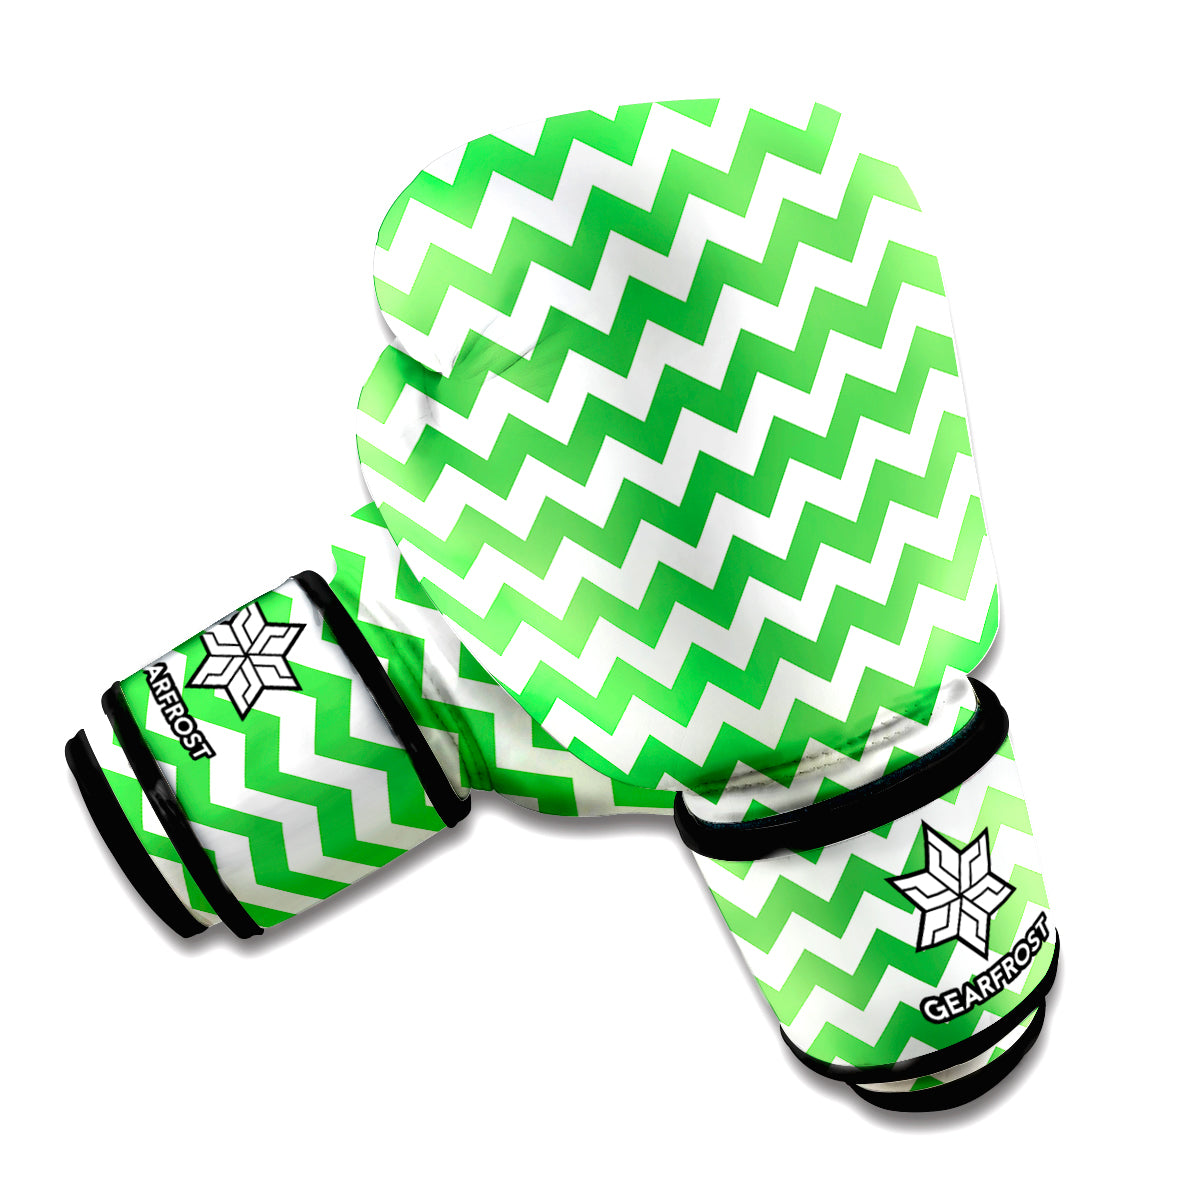 Green And White Chevron Pattern Print Boxing Gloves